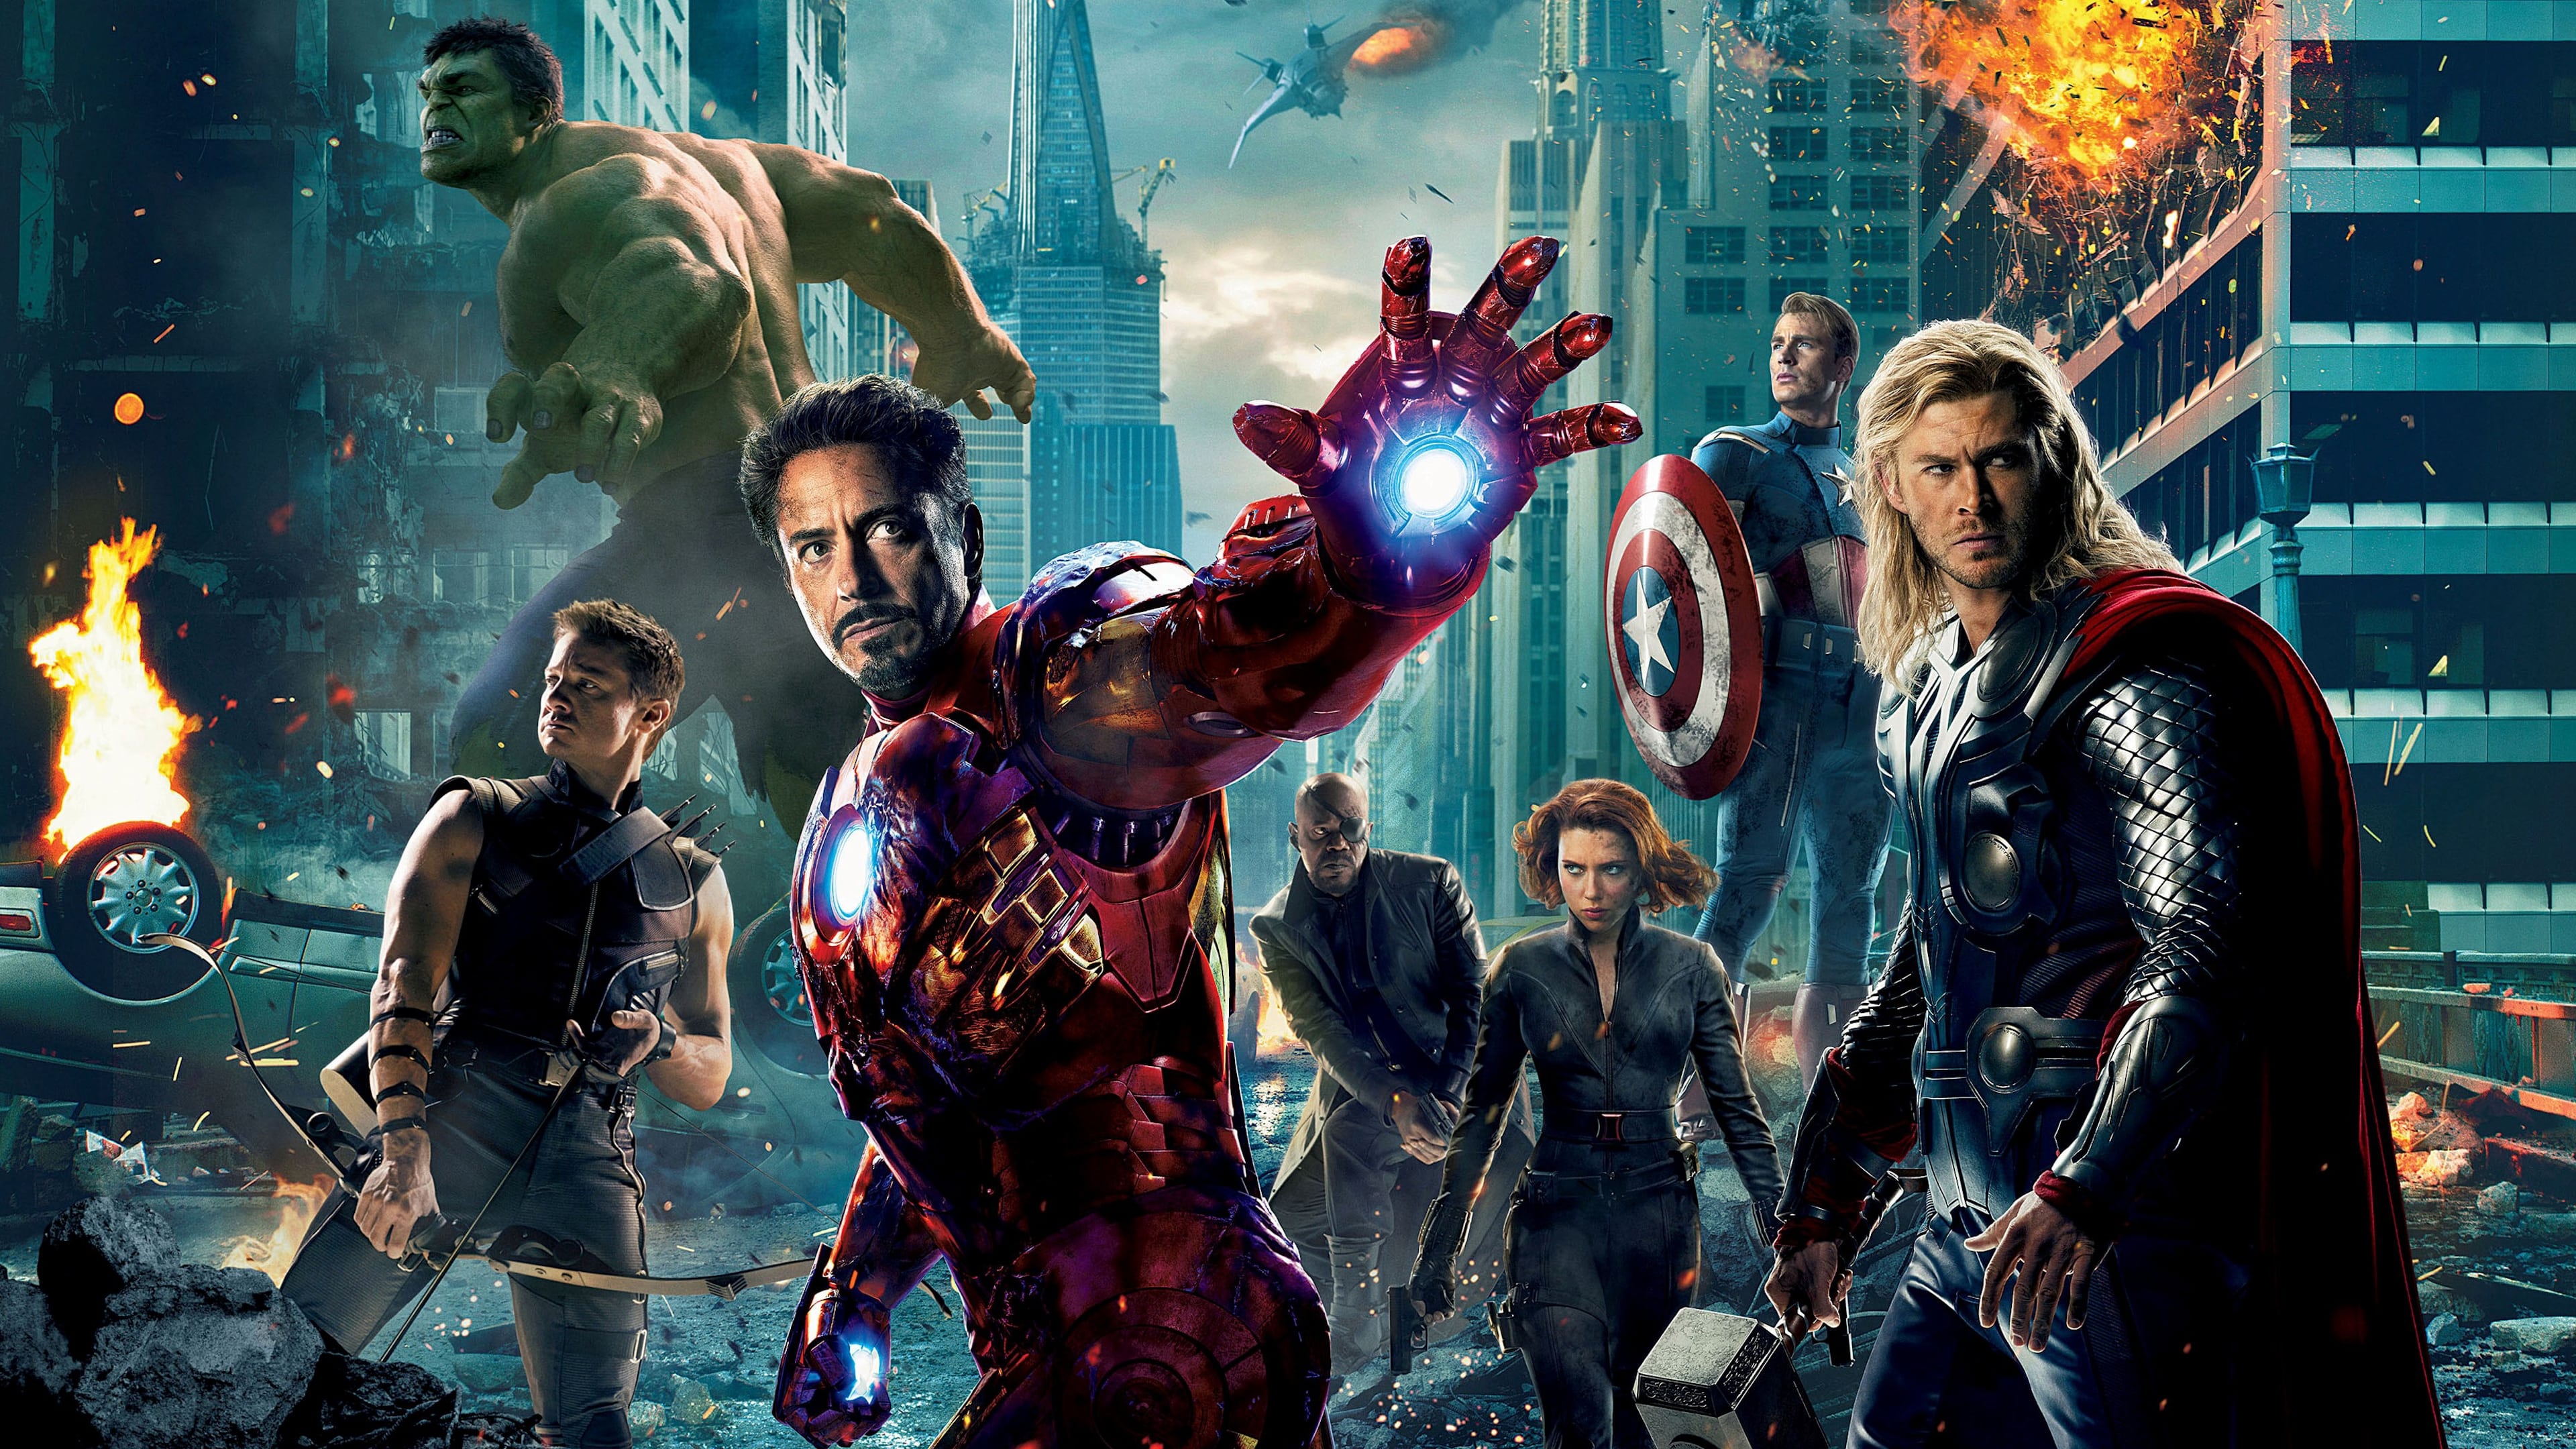 The Avengers Box Office Hit